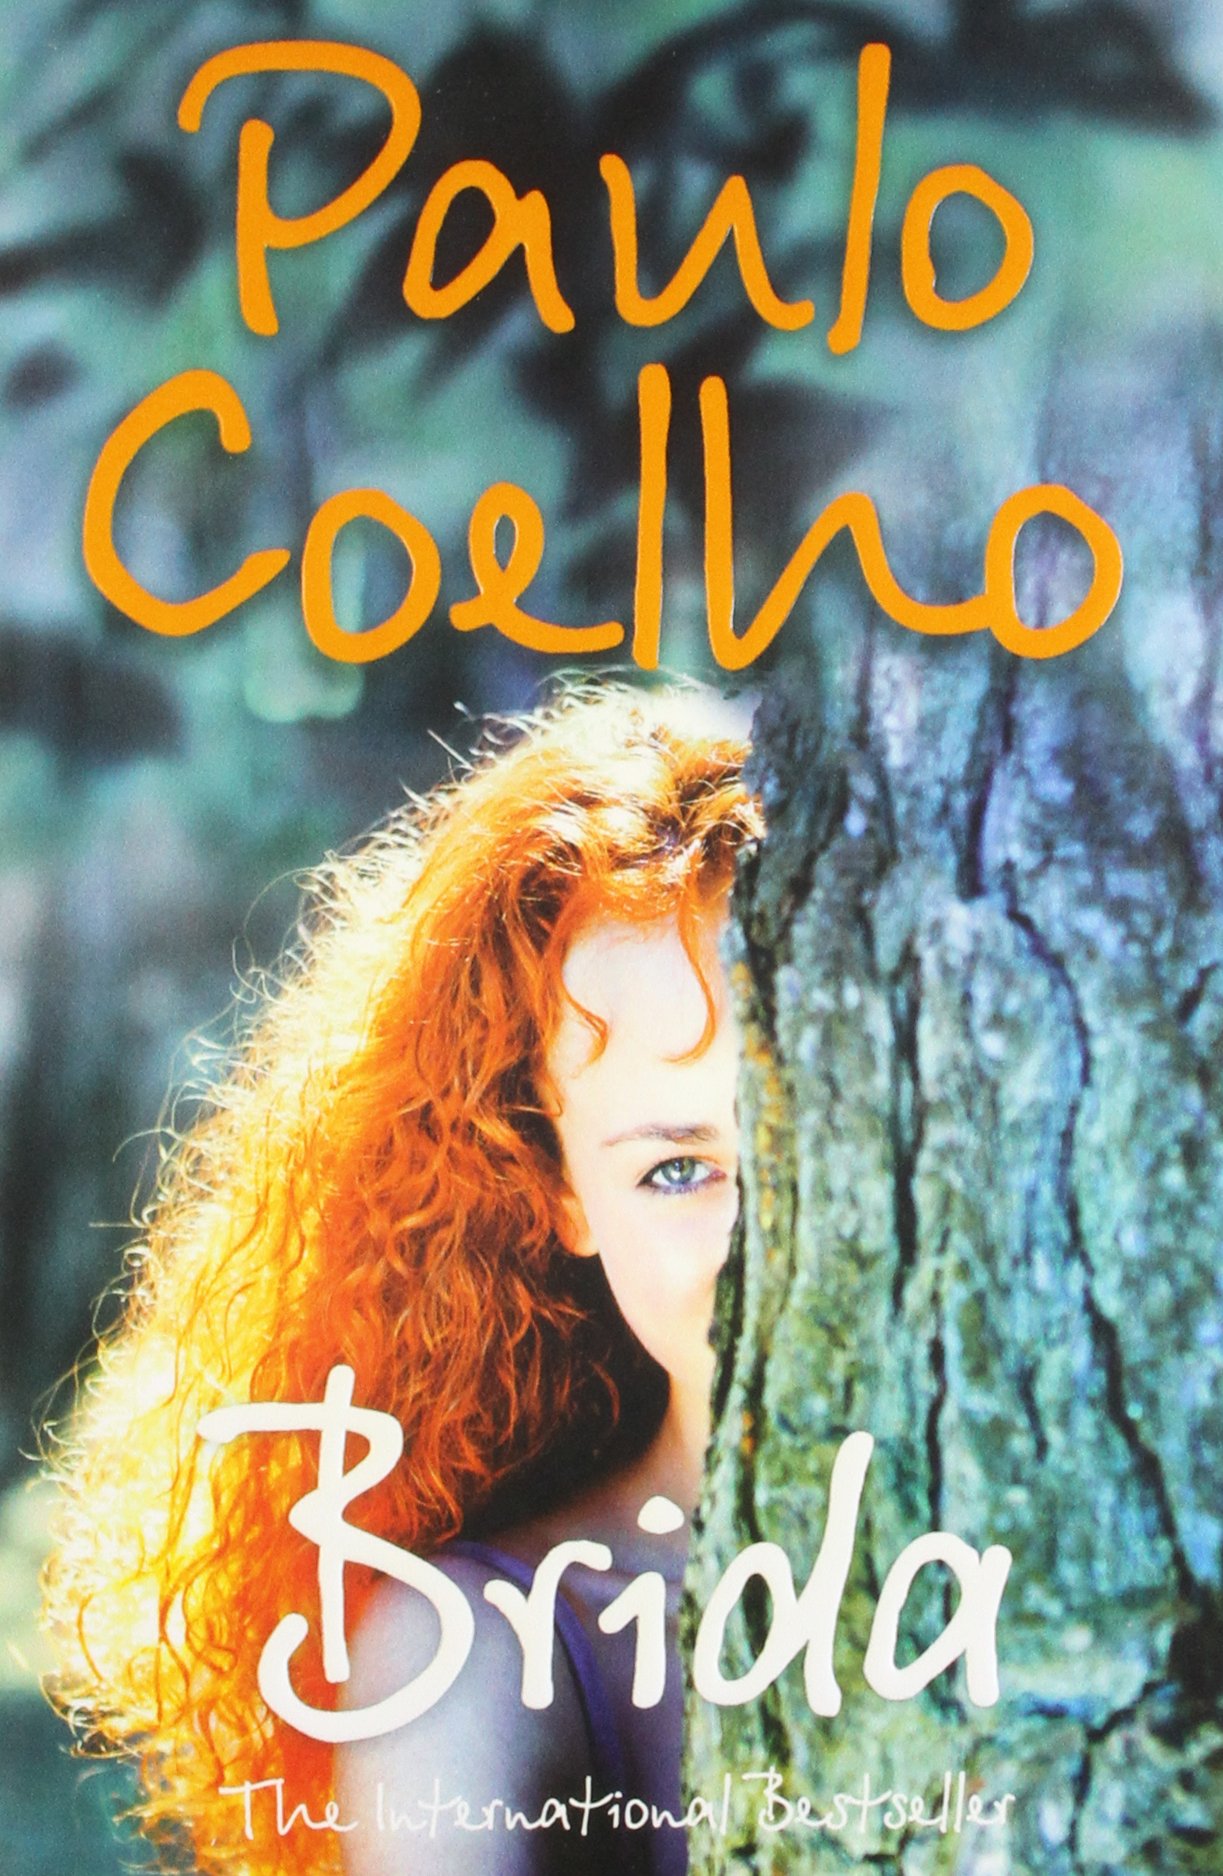 Brida by( Brida by( Paulo Coelho)Published by( Harper Collins)